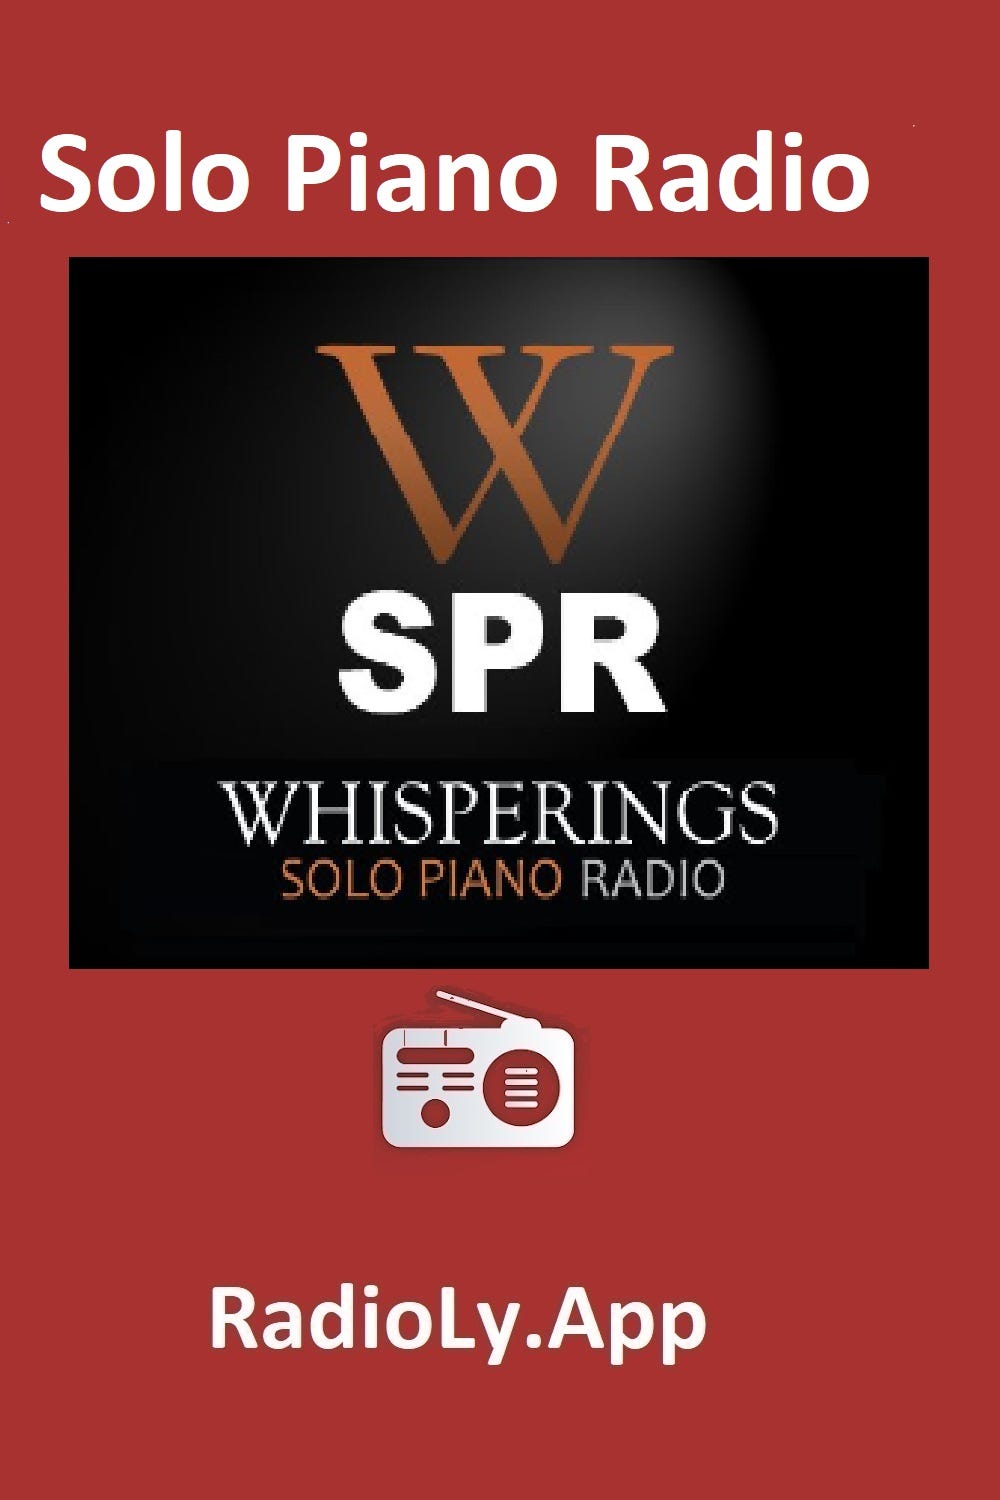 Solo Piano Radio — USA Radio Station Online — RadiolyApp - Radioly - Medium